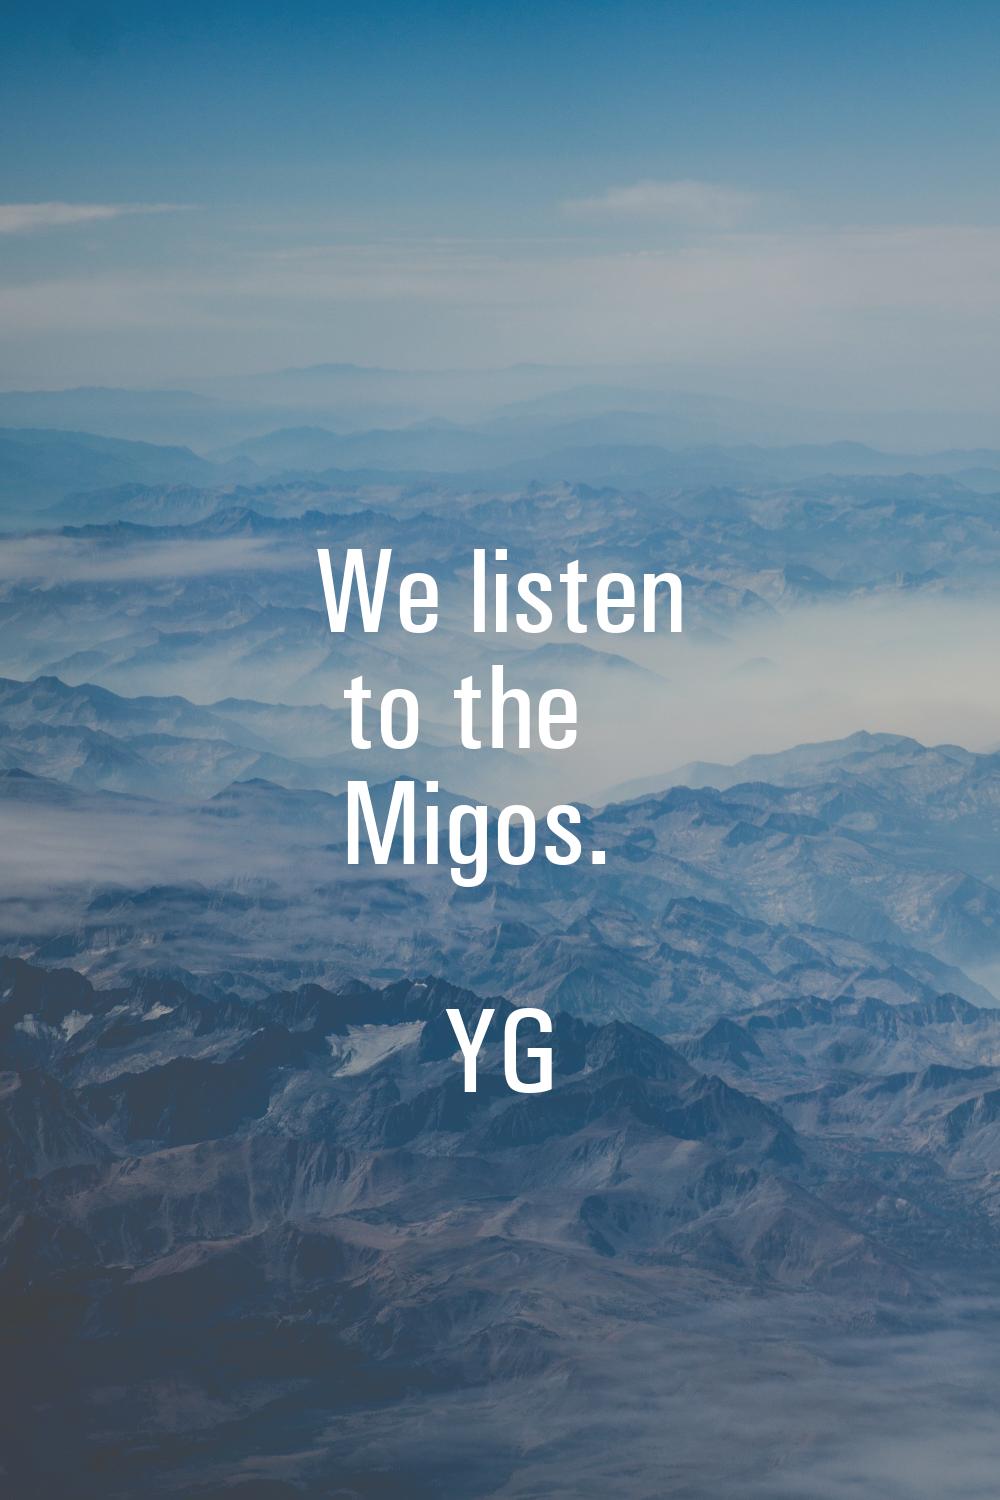 We listen to the Migos.